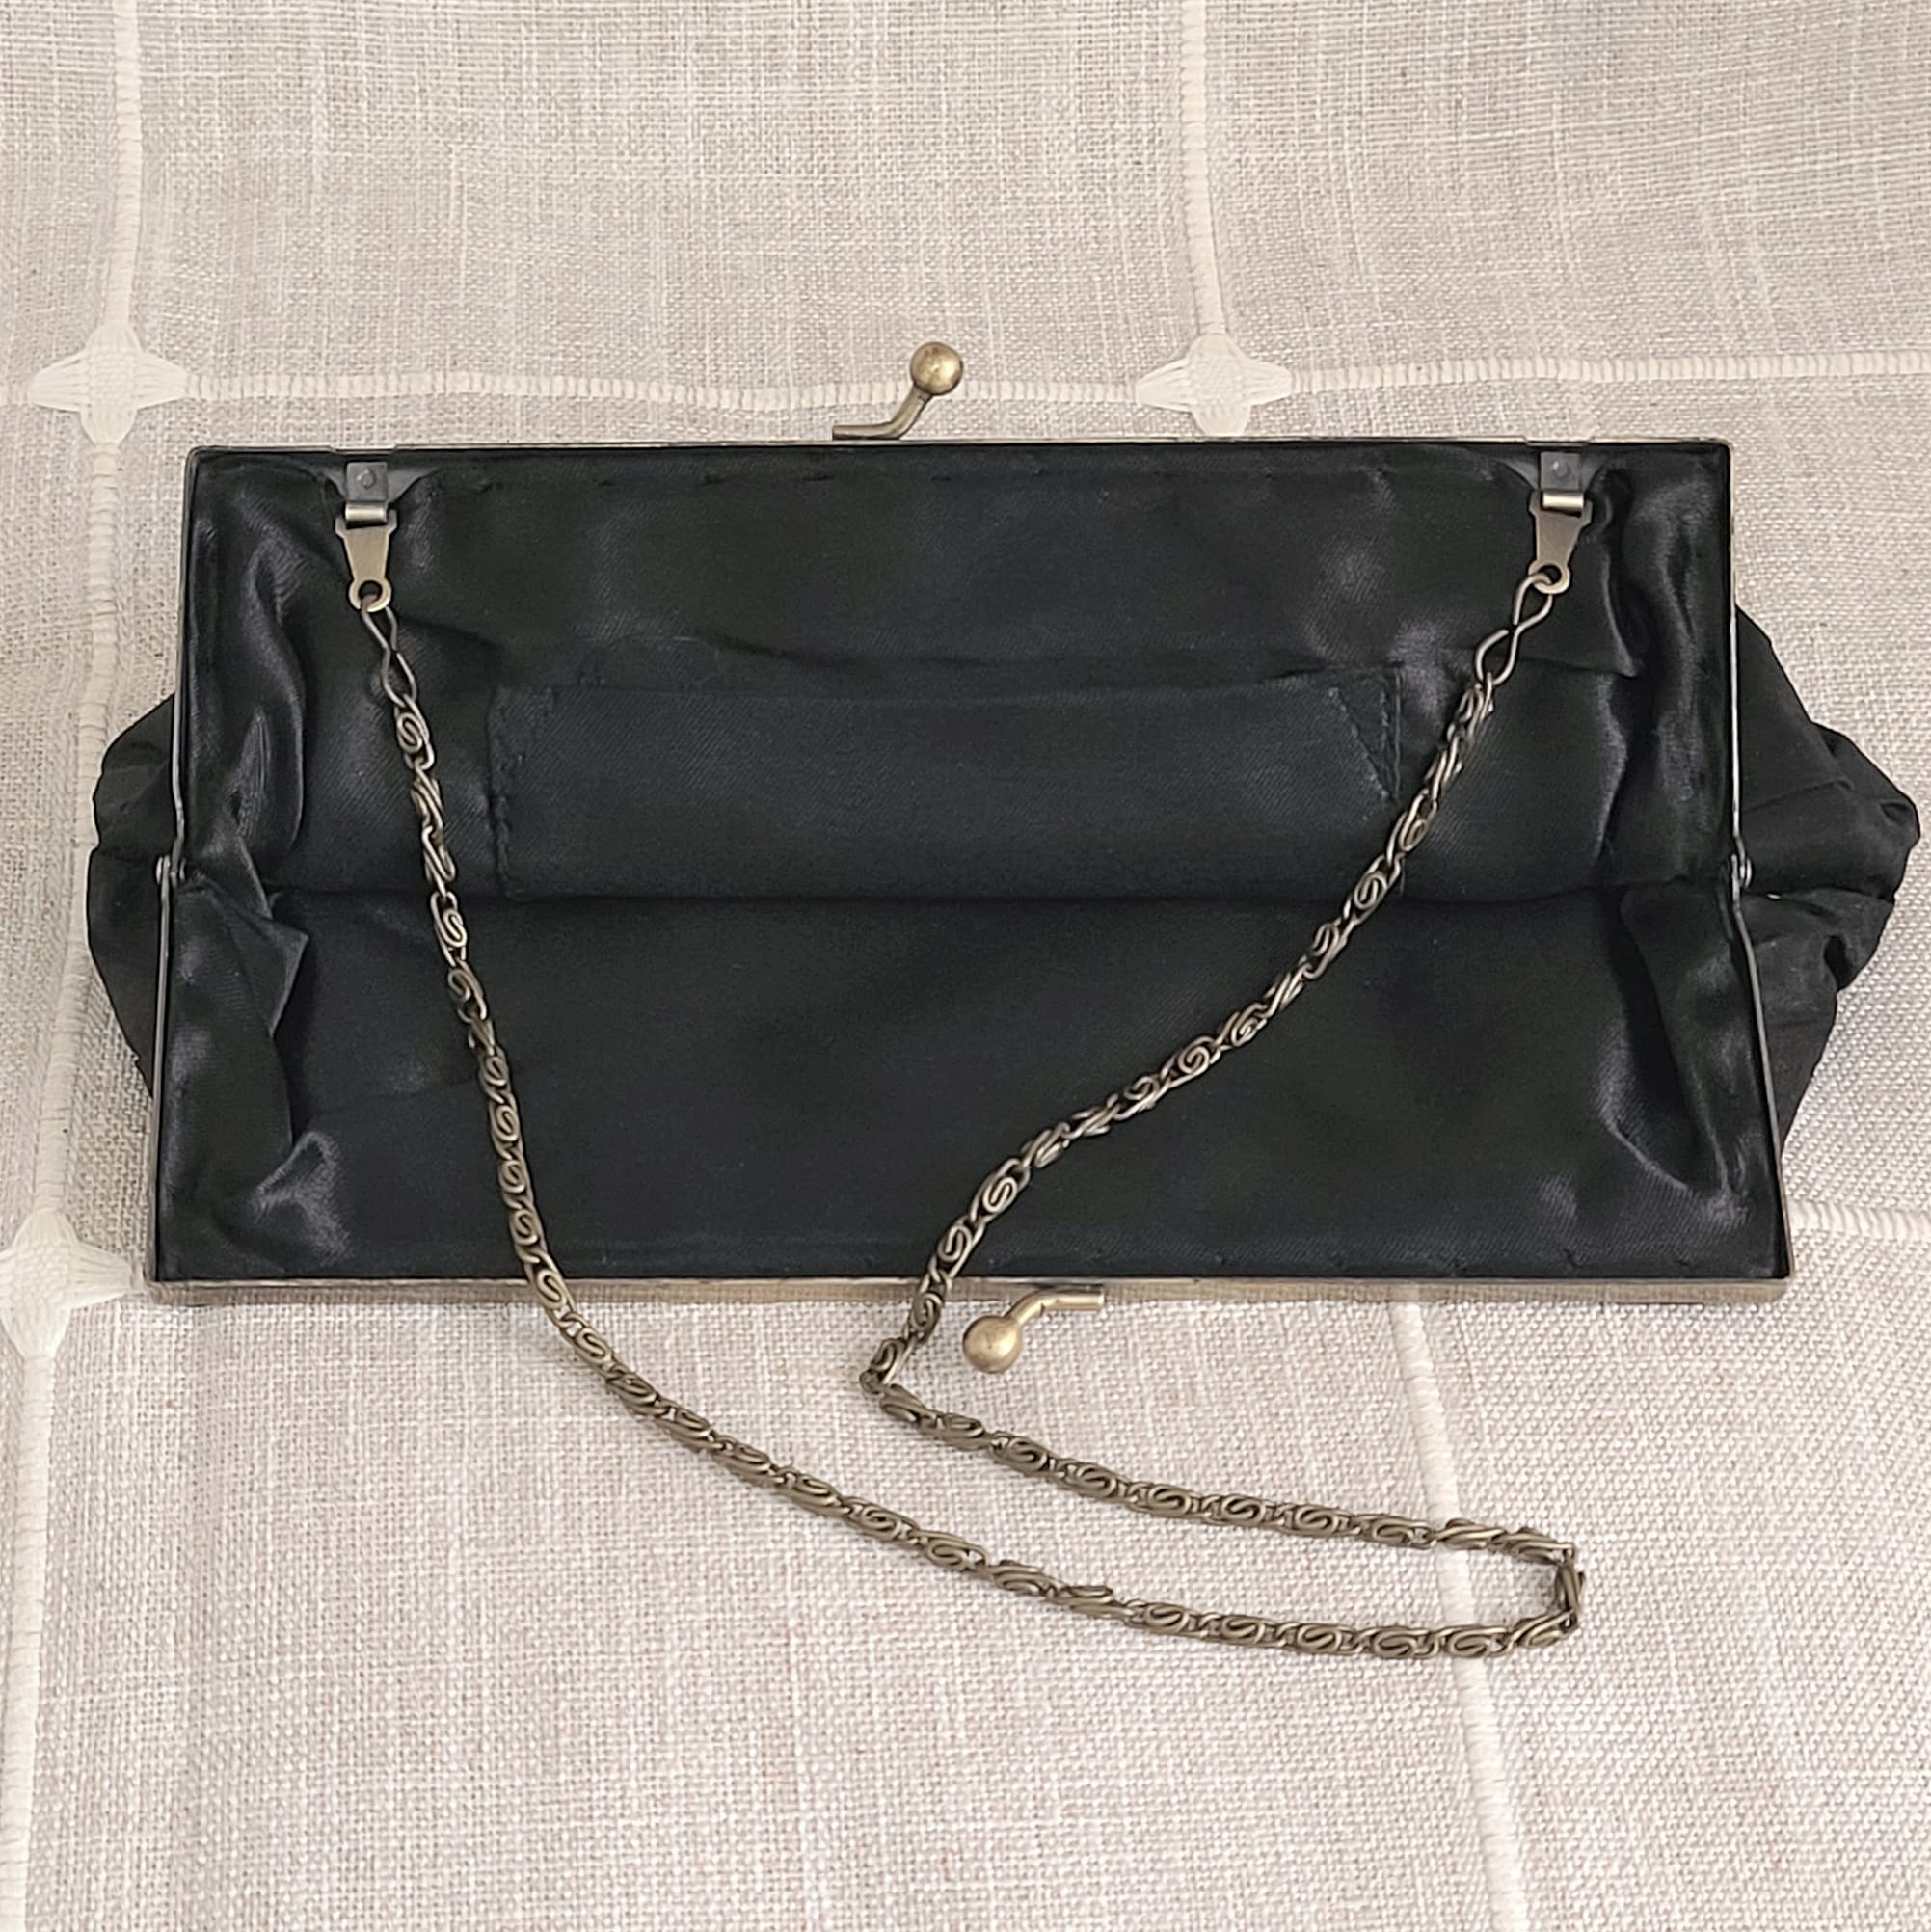 Vintage Inspired Pinch Pleat Black Evening Bag